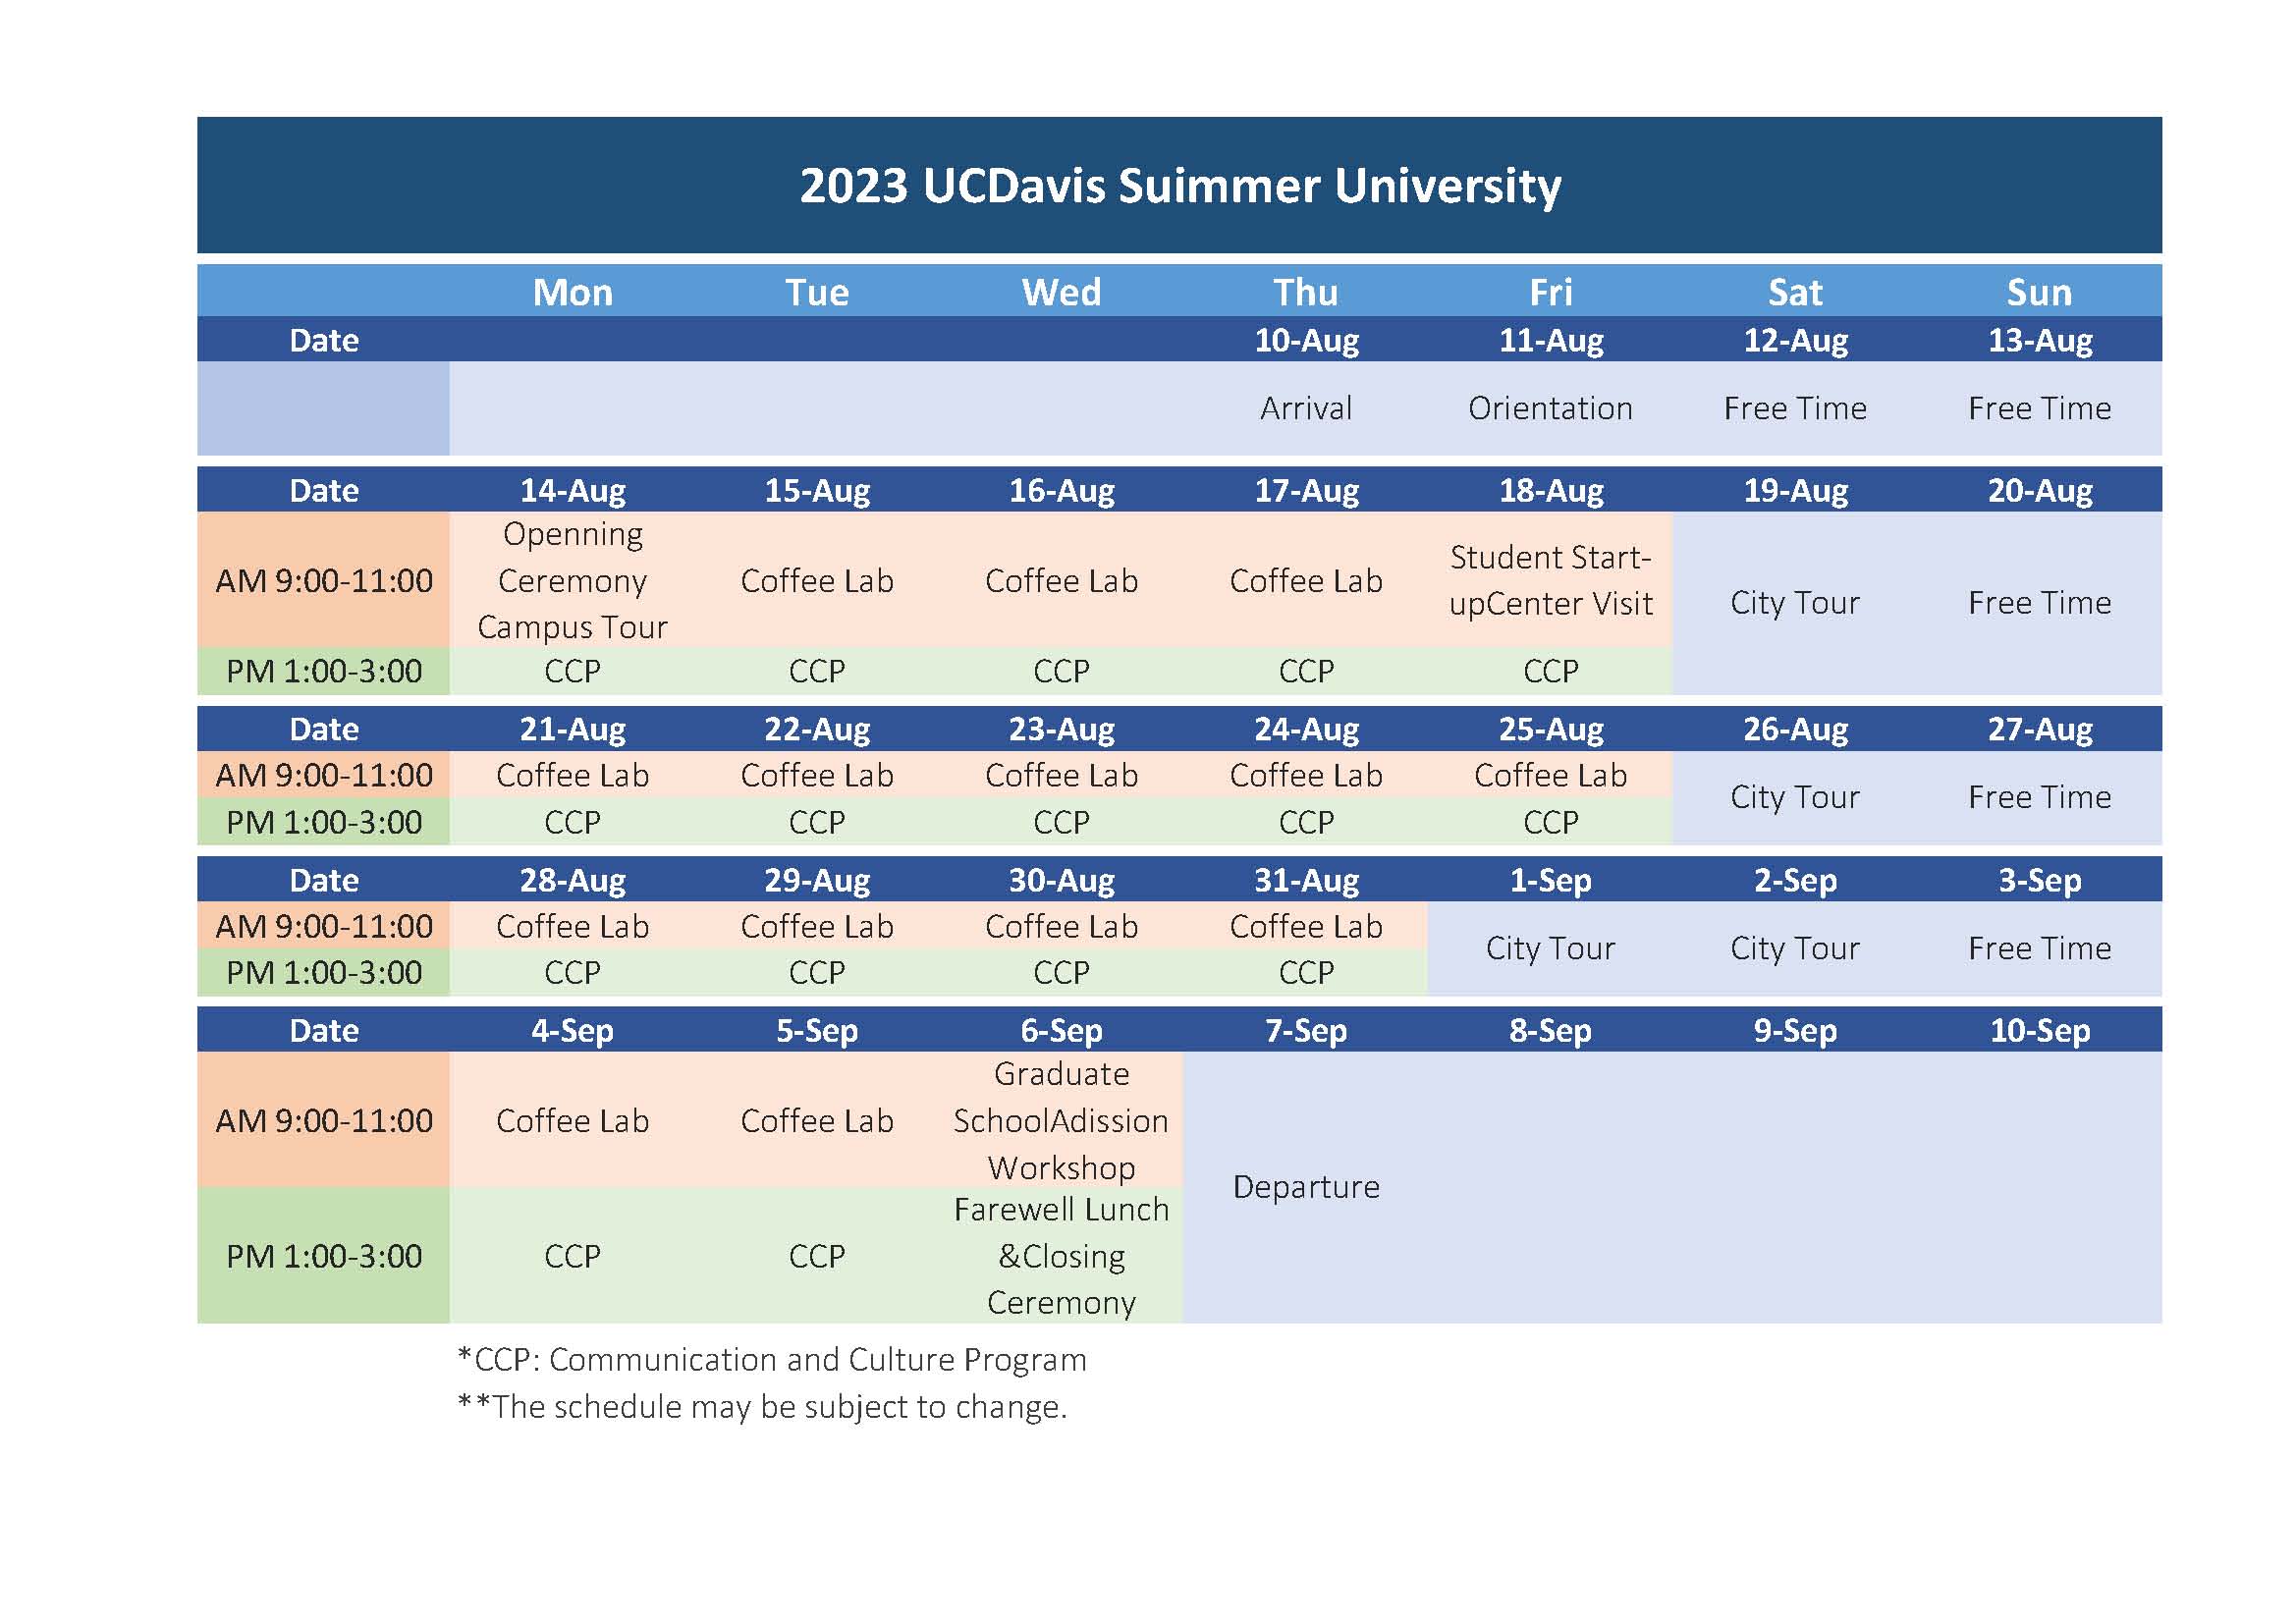 https://oia.nchu.edu.tw/images/Image/05_Global_Mobility/5-3-Overseas-Short-term-Programs/2023/2023UCD_summer_university_schedule.jpg